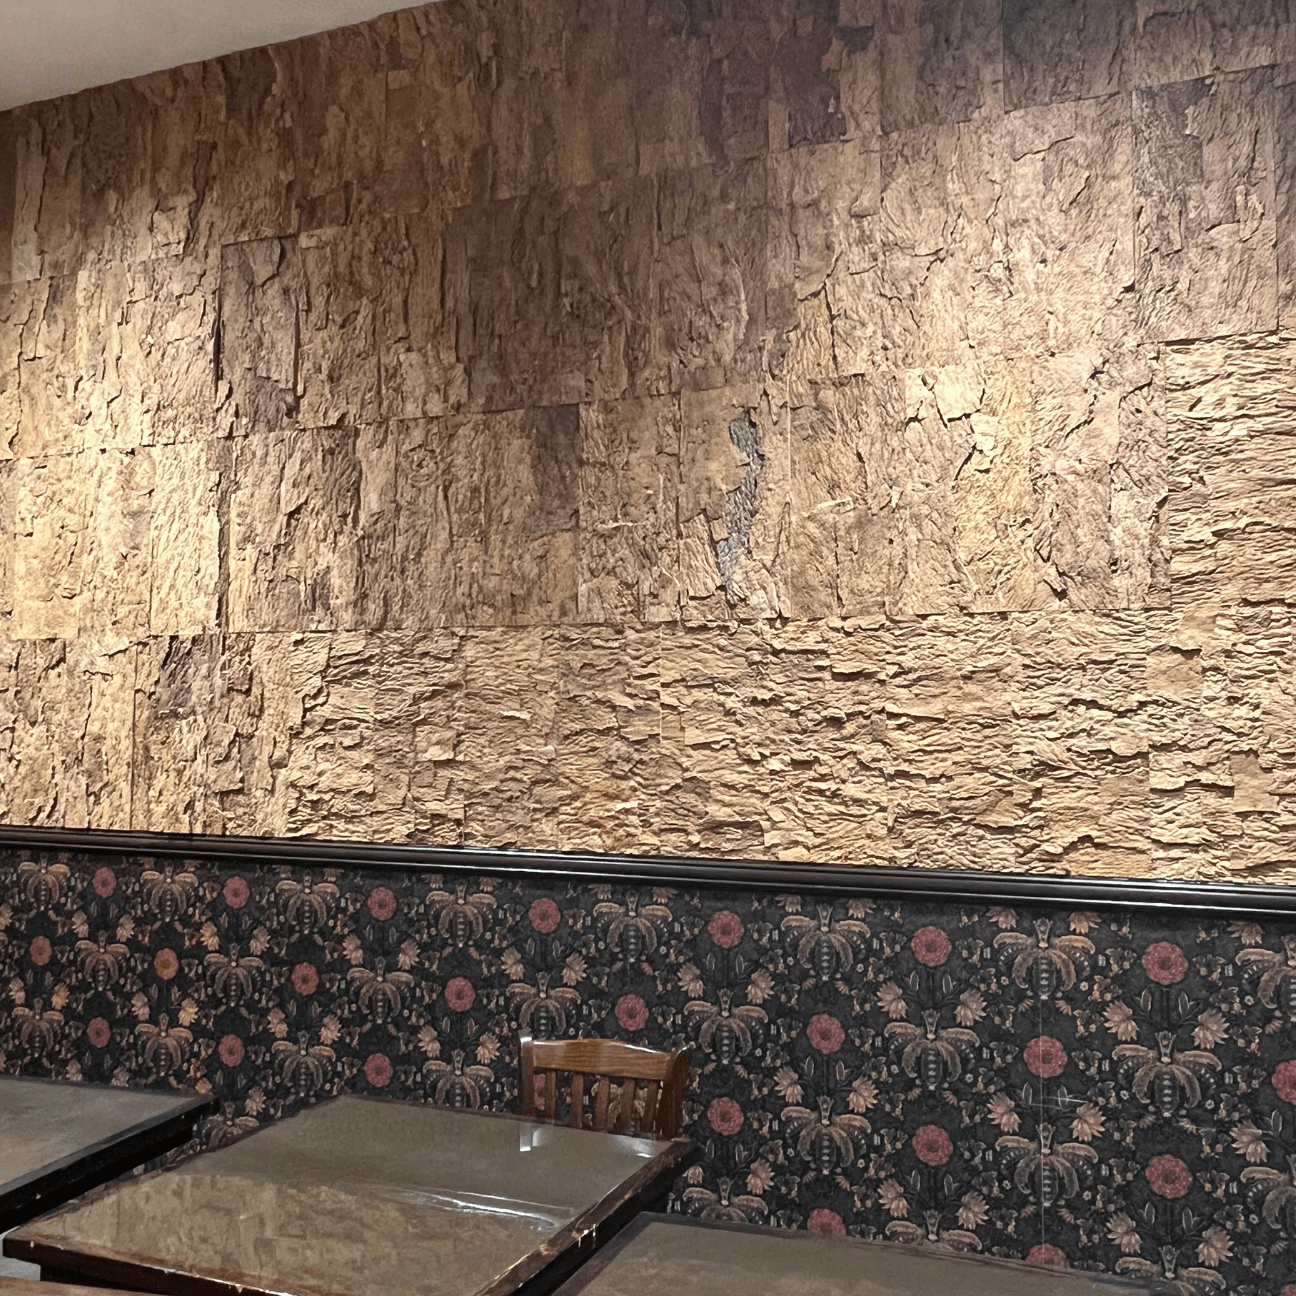 Tackboard Cork Wall Tile - Various Patterns - CorkHouse